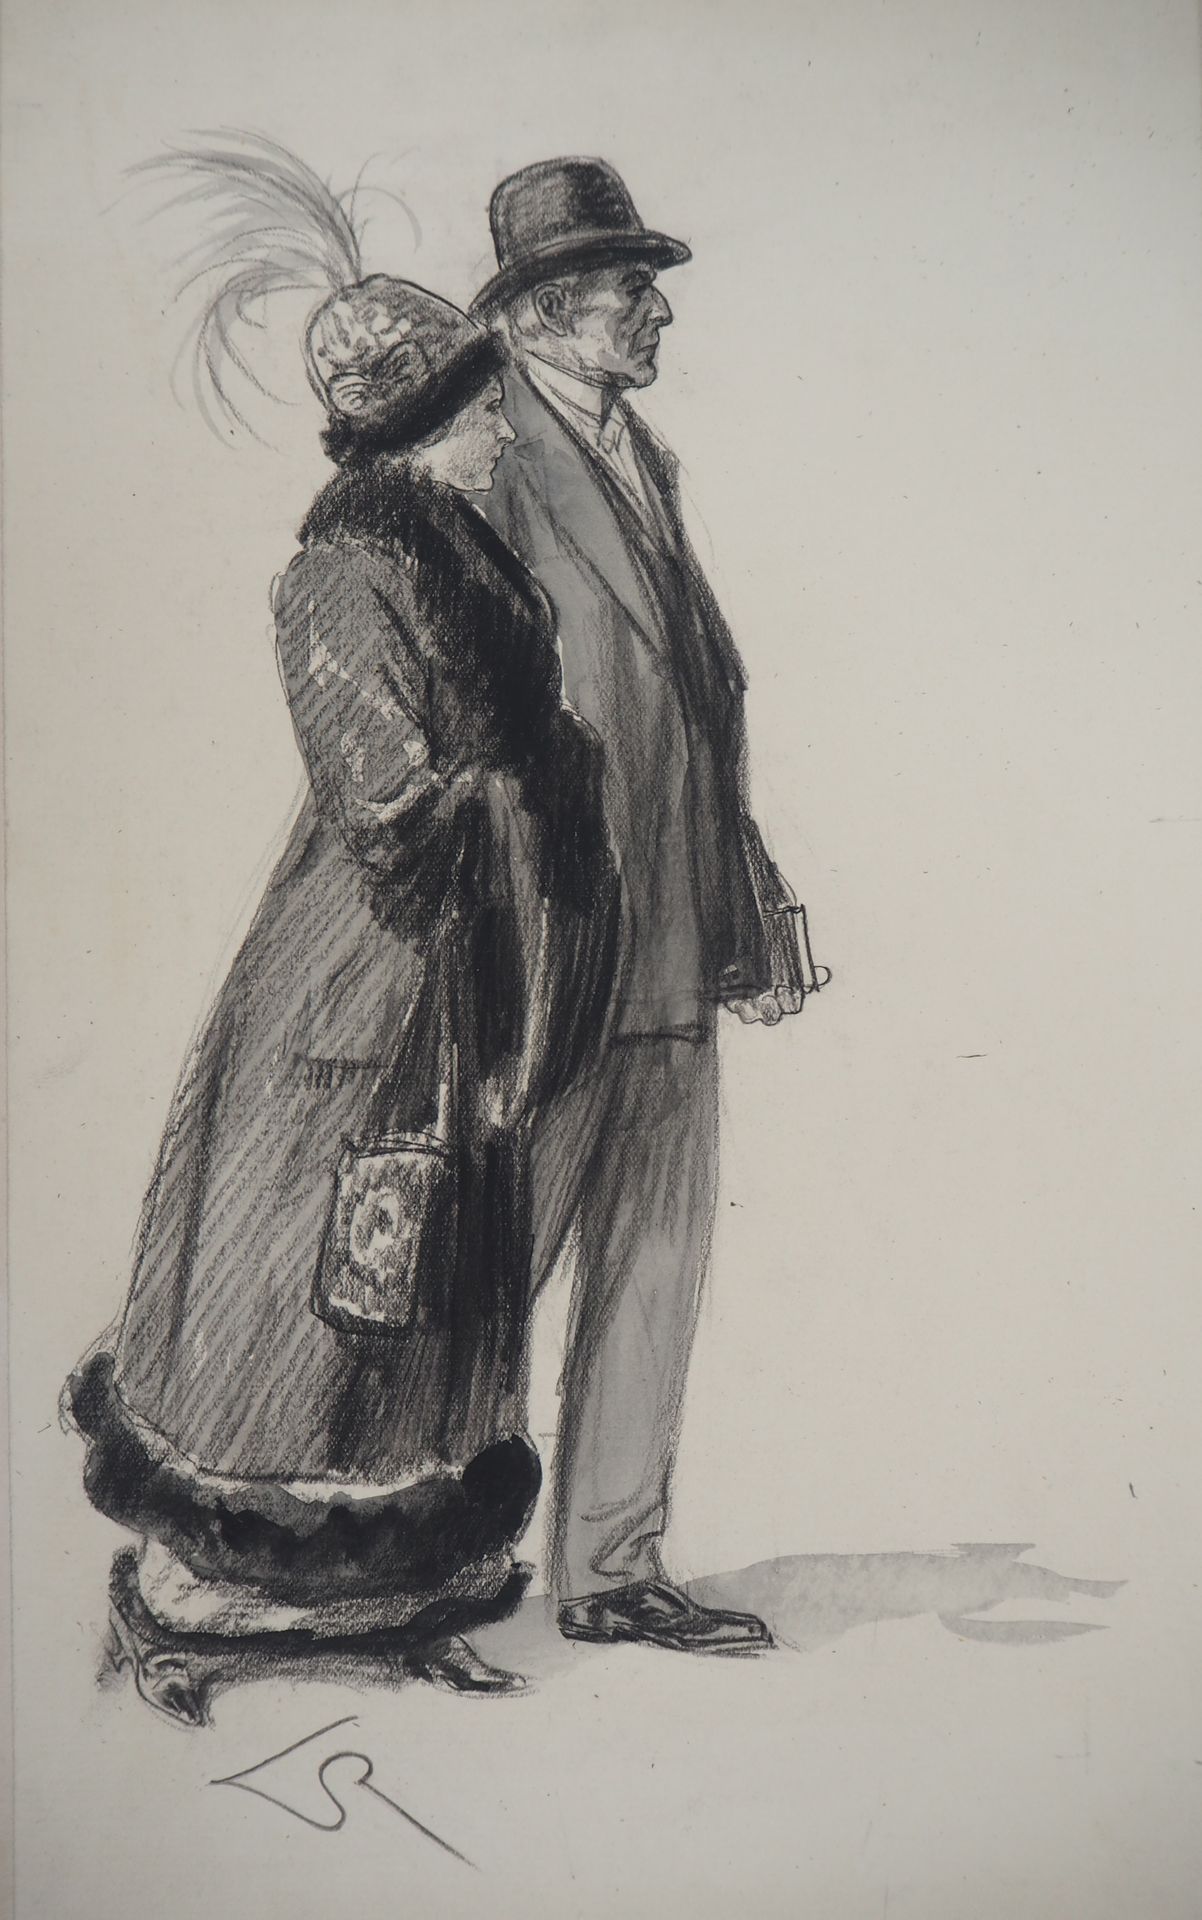 Almery LOBEL-RICHE Alméry LOBEL-RICHE (1880-1950)

优雅的情侣，约1920年

铅笔线和树桩上的印度墨水原画
&hellip;